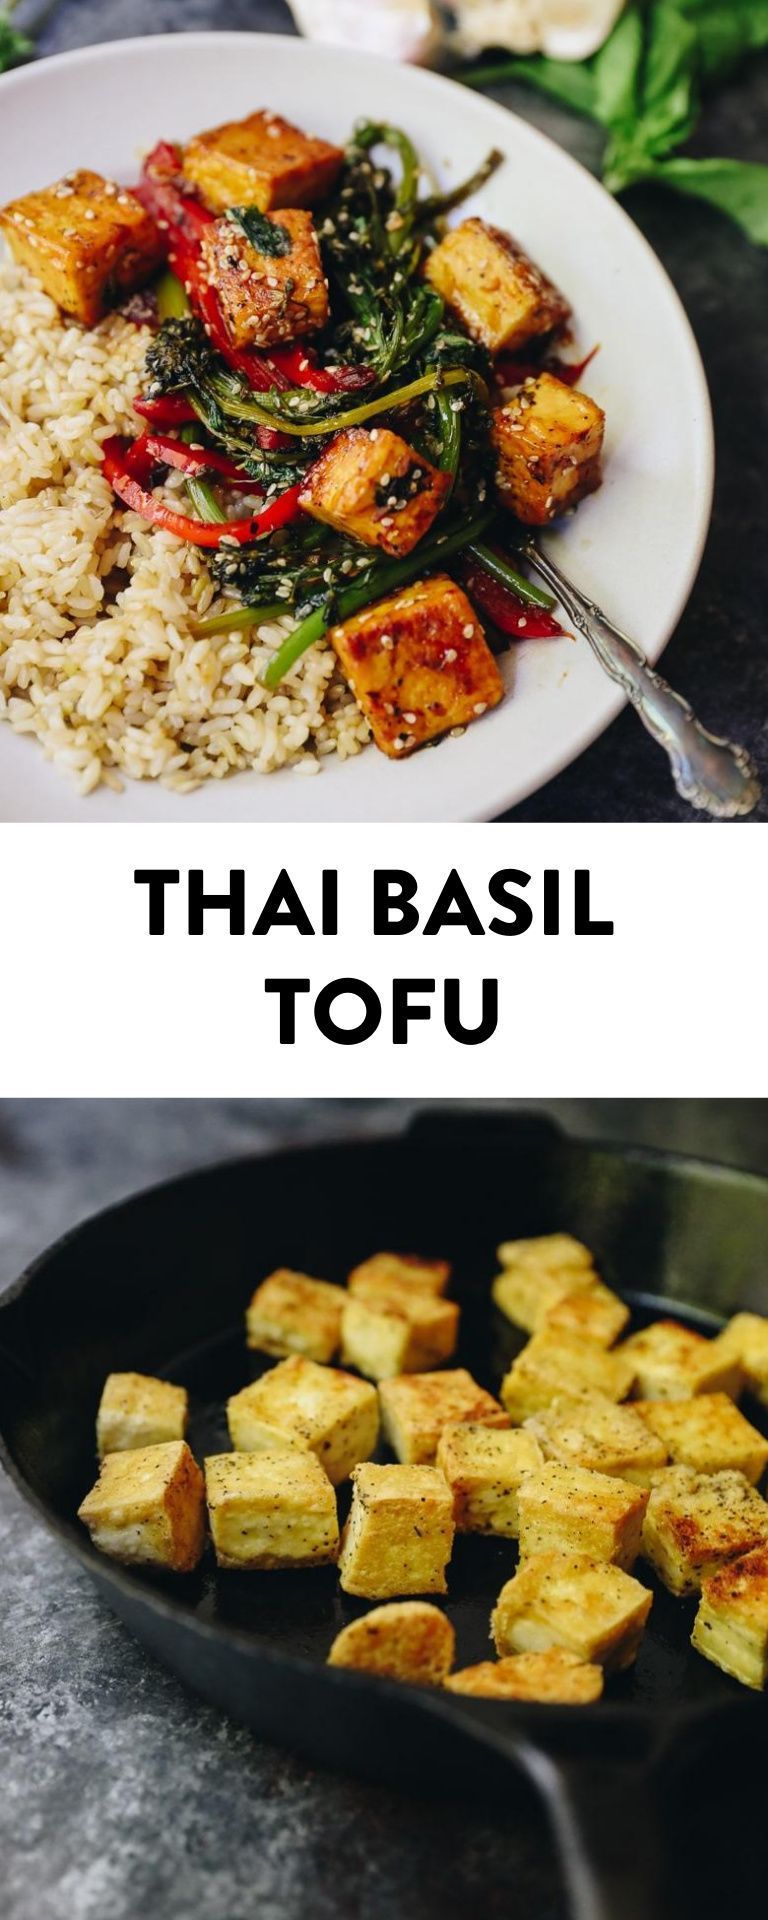 Thai Basil Tofu Recipe [Vegetarian-friendly] - The Healthy Maven -   19 dinner recipes for family vegetarian ideas